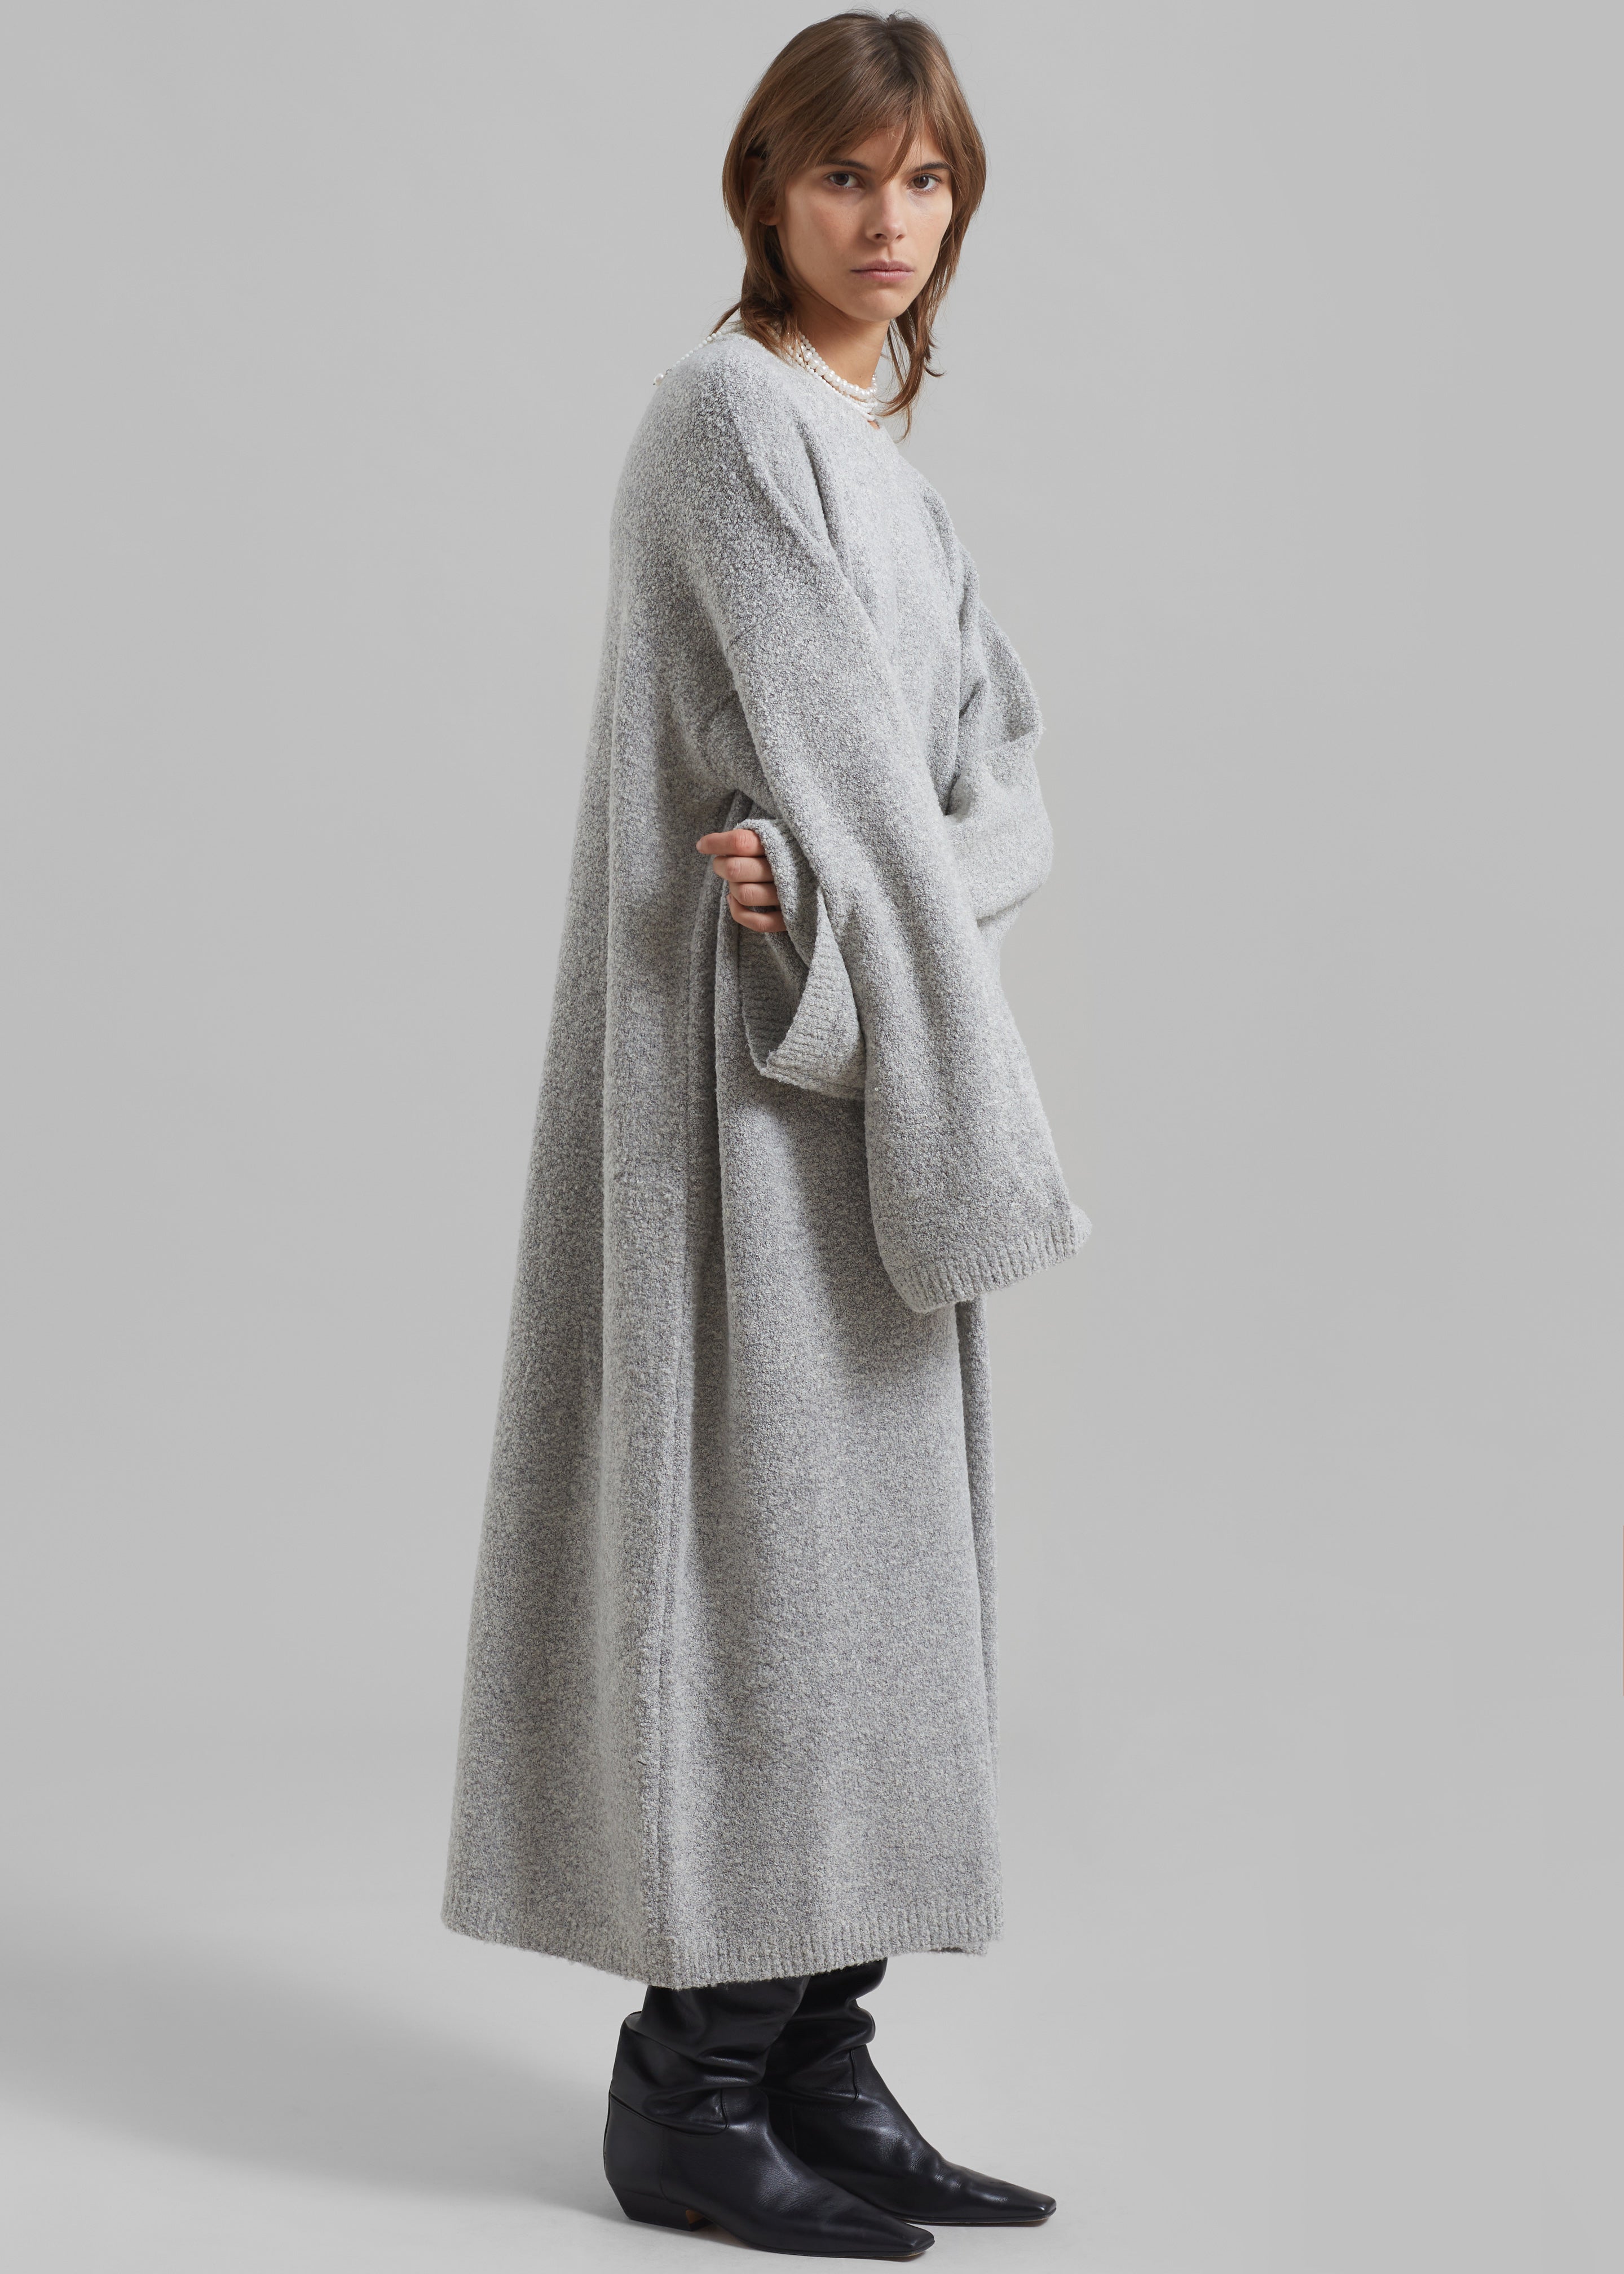 Alba Long Hooded Dress - Grey - 4